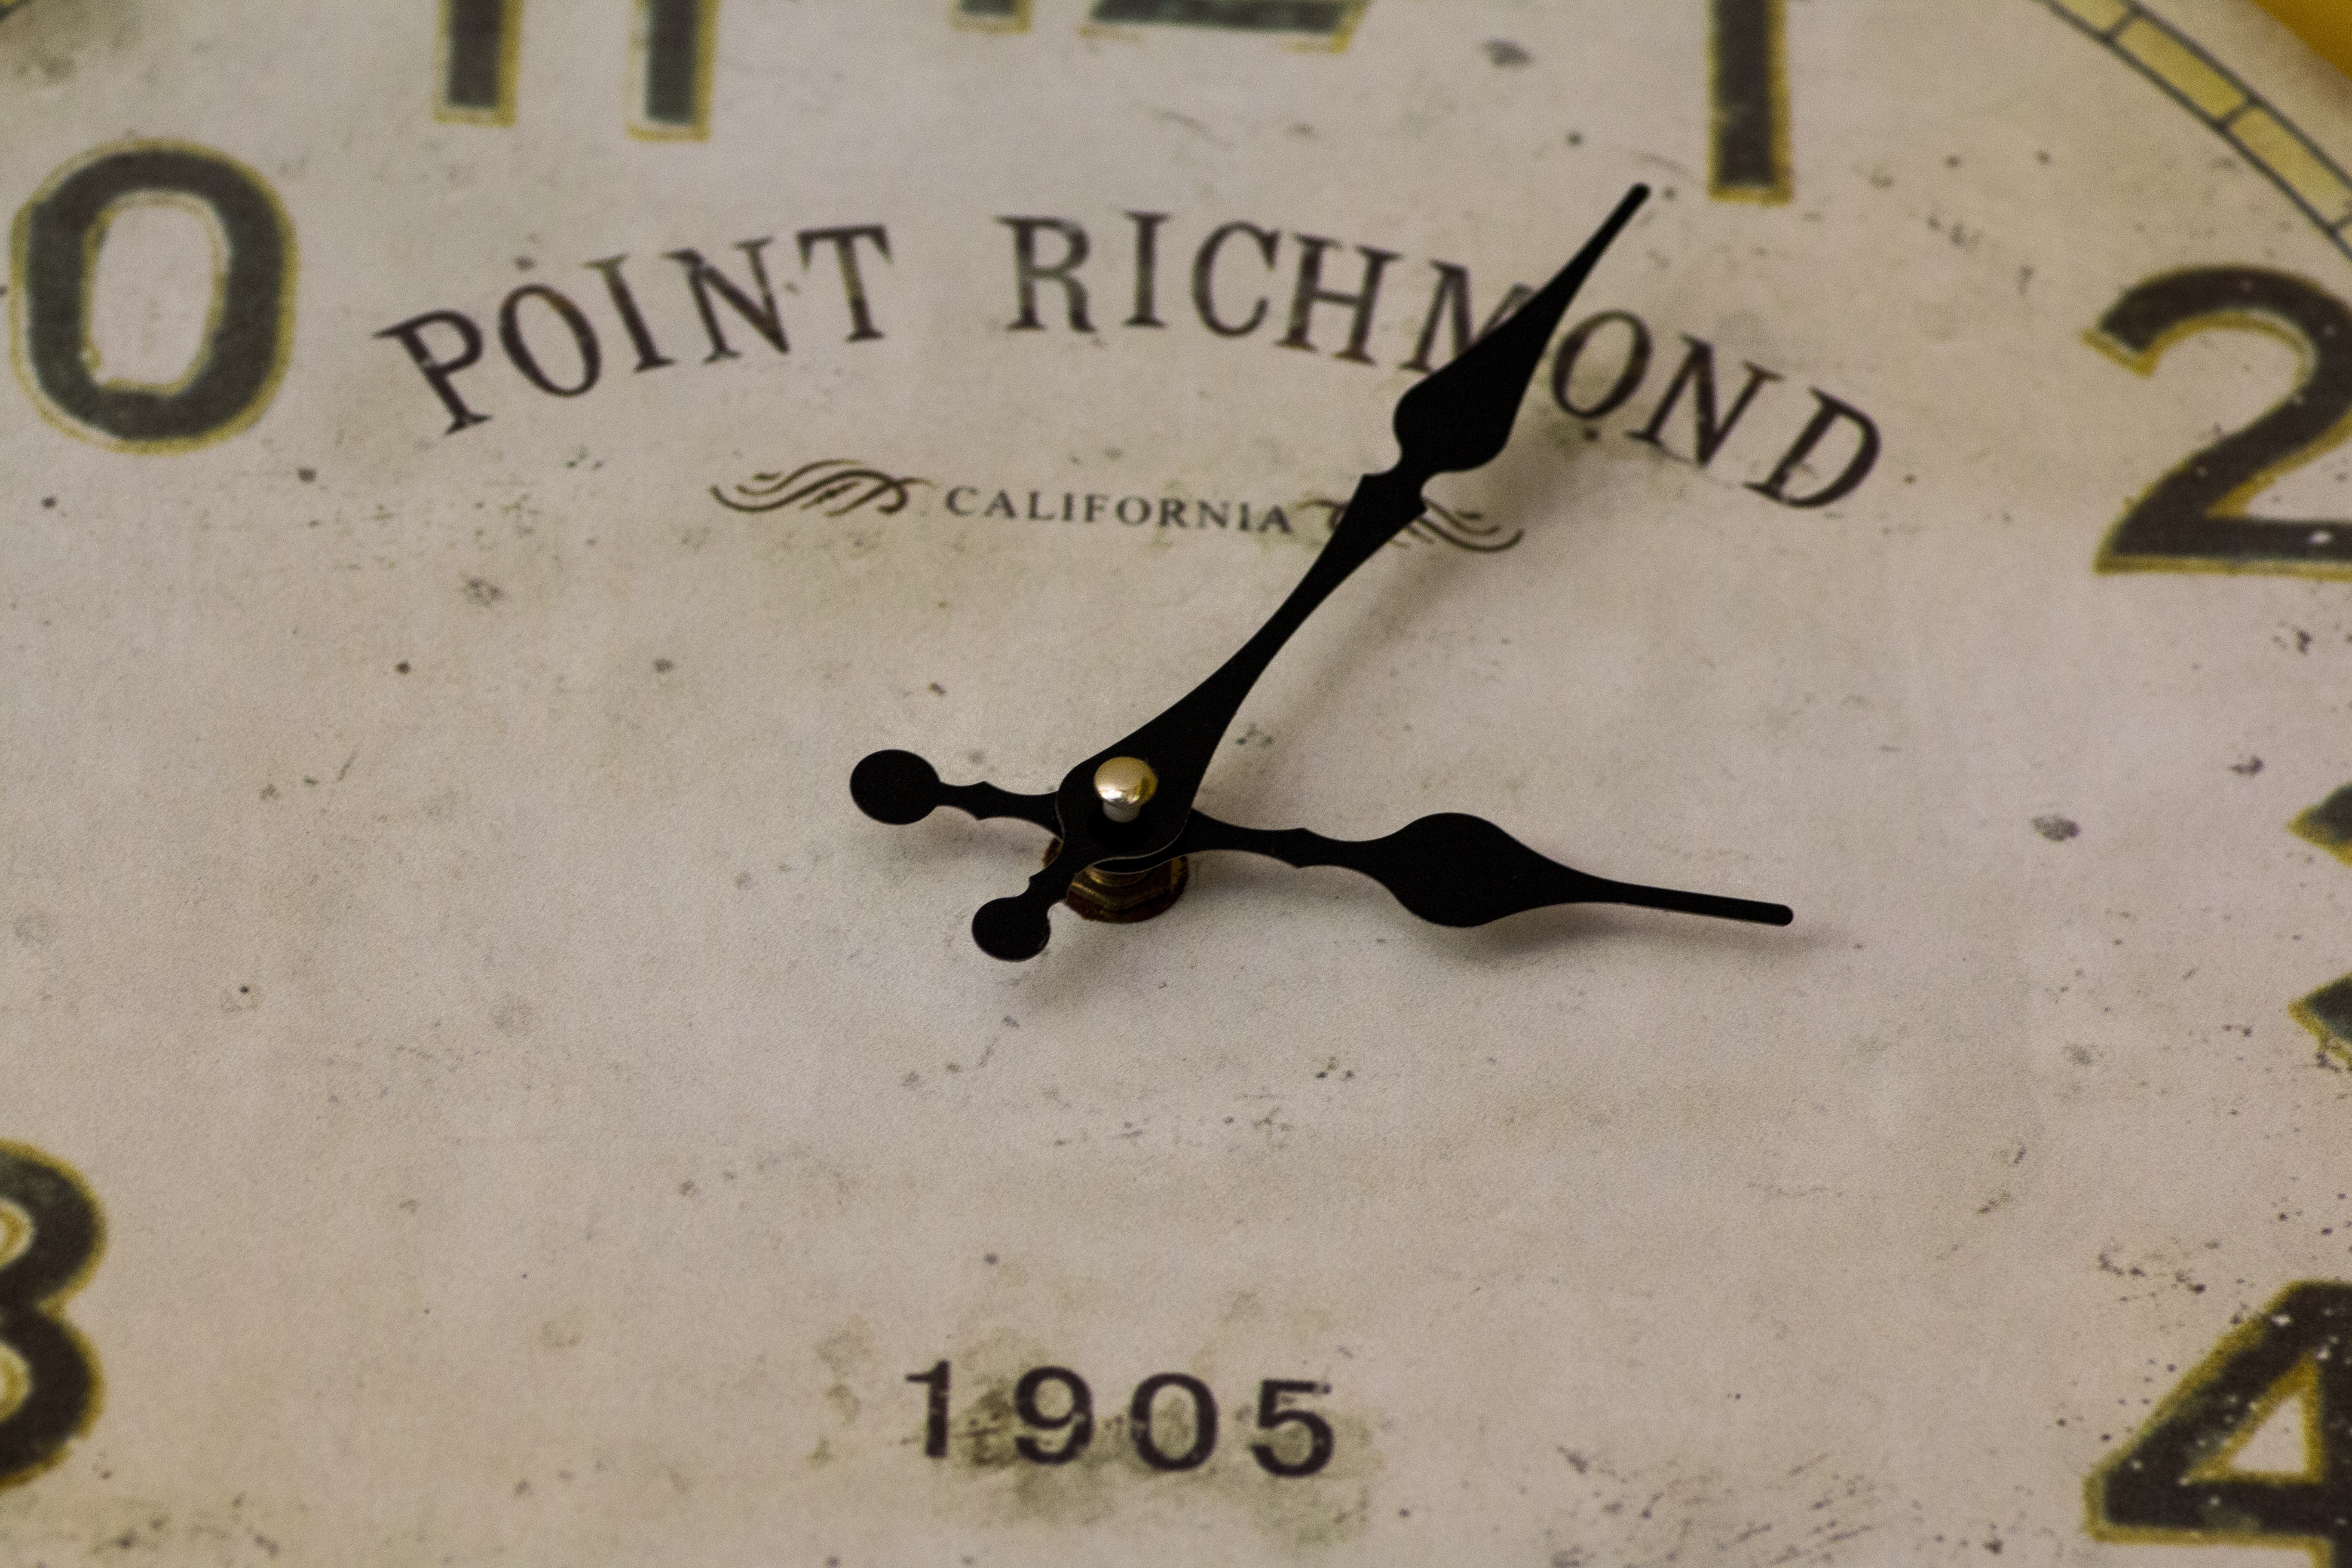 white point richmond 1905 clock